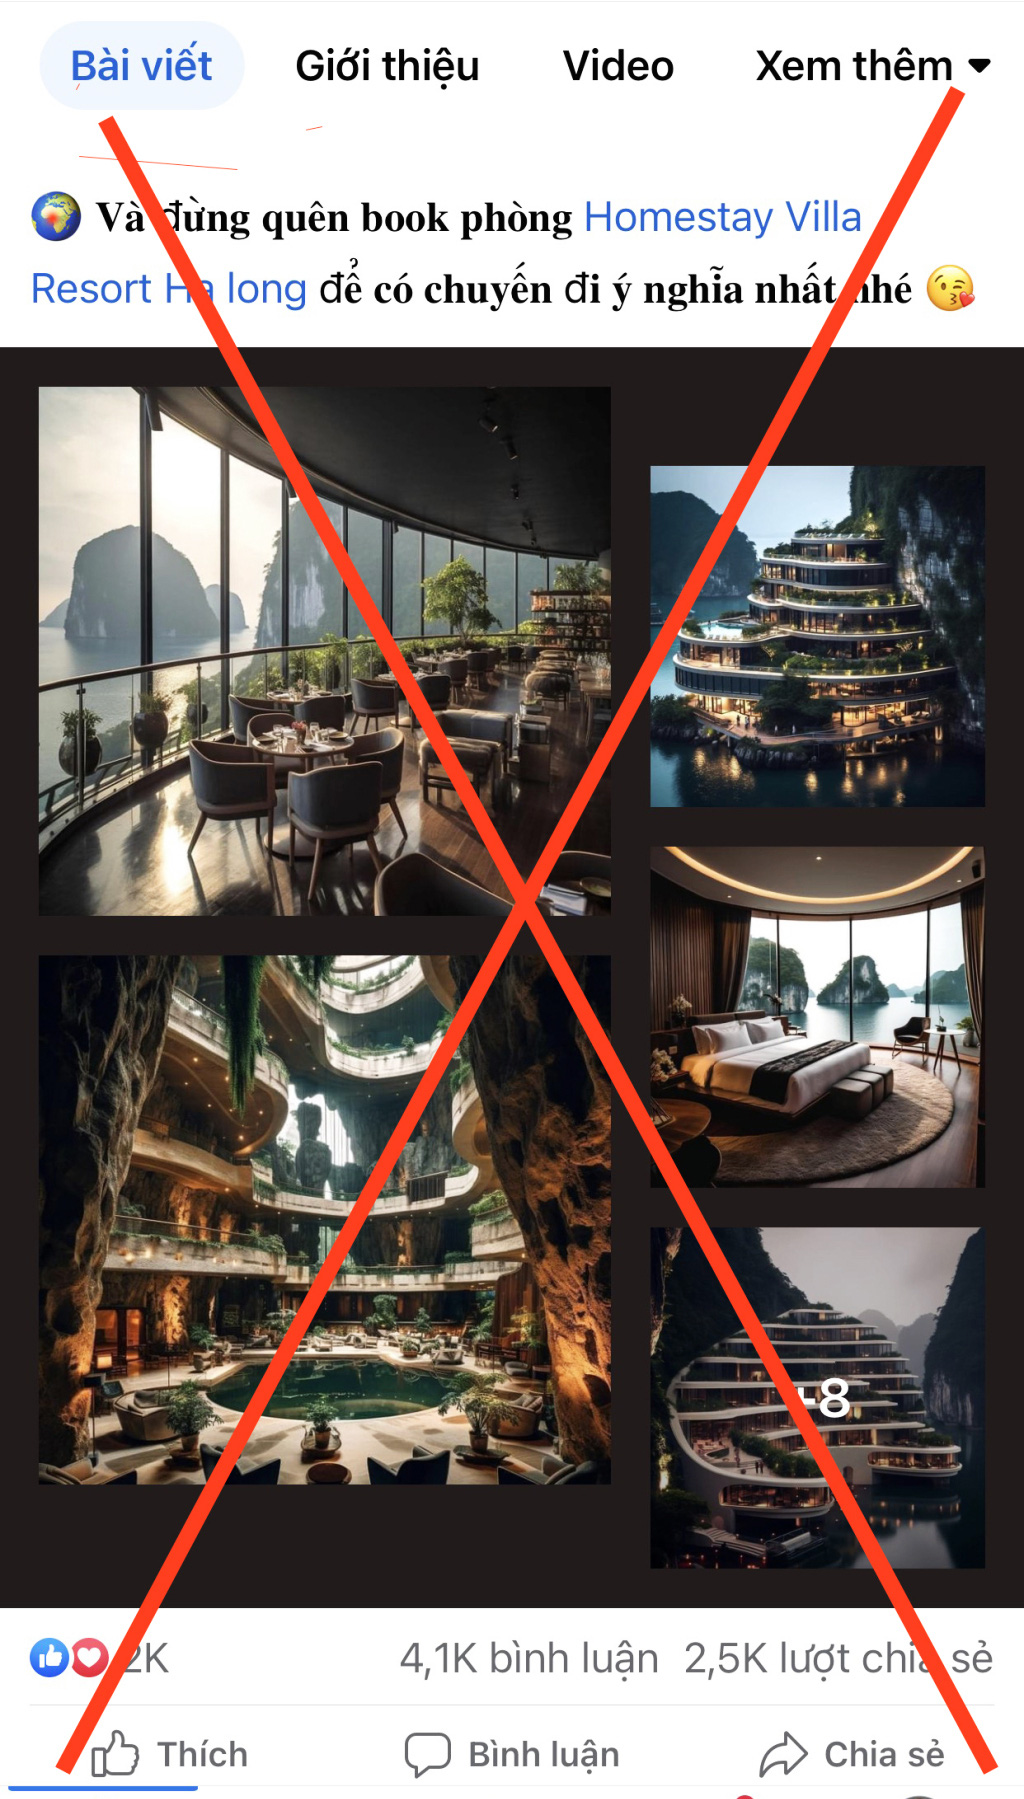 Photos of luxury hotel on Vietnam’s Ha Long Bay confirmed fake